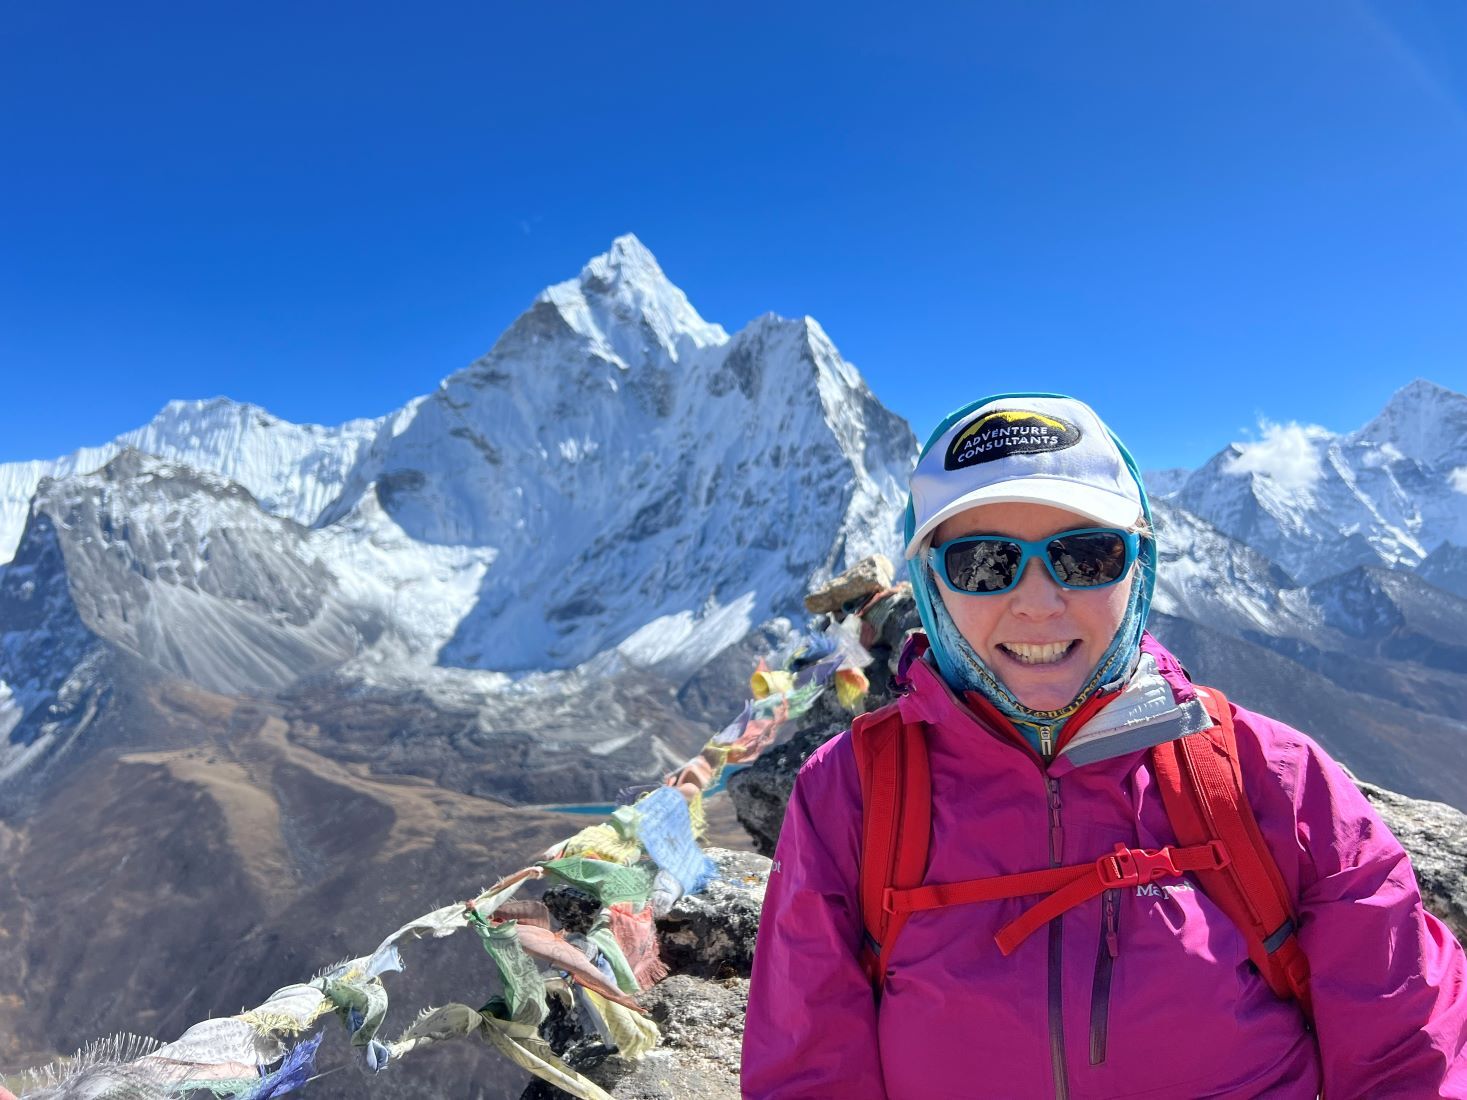 The best views of the Khumbu Himalaya are seen on the Three Passes Nepal Trek